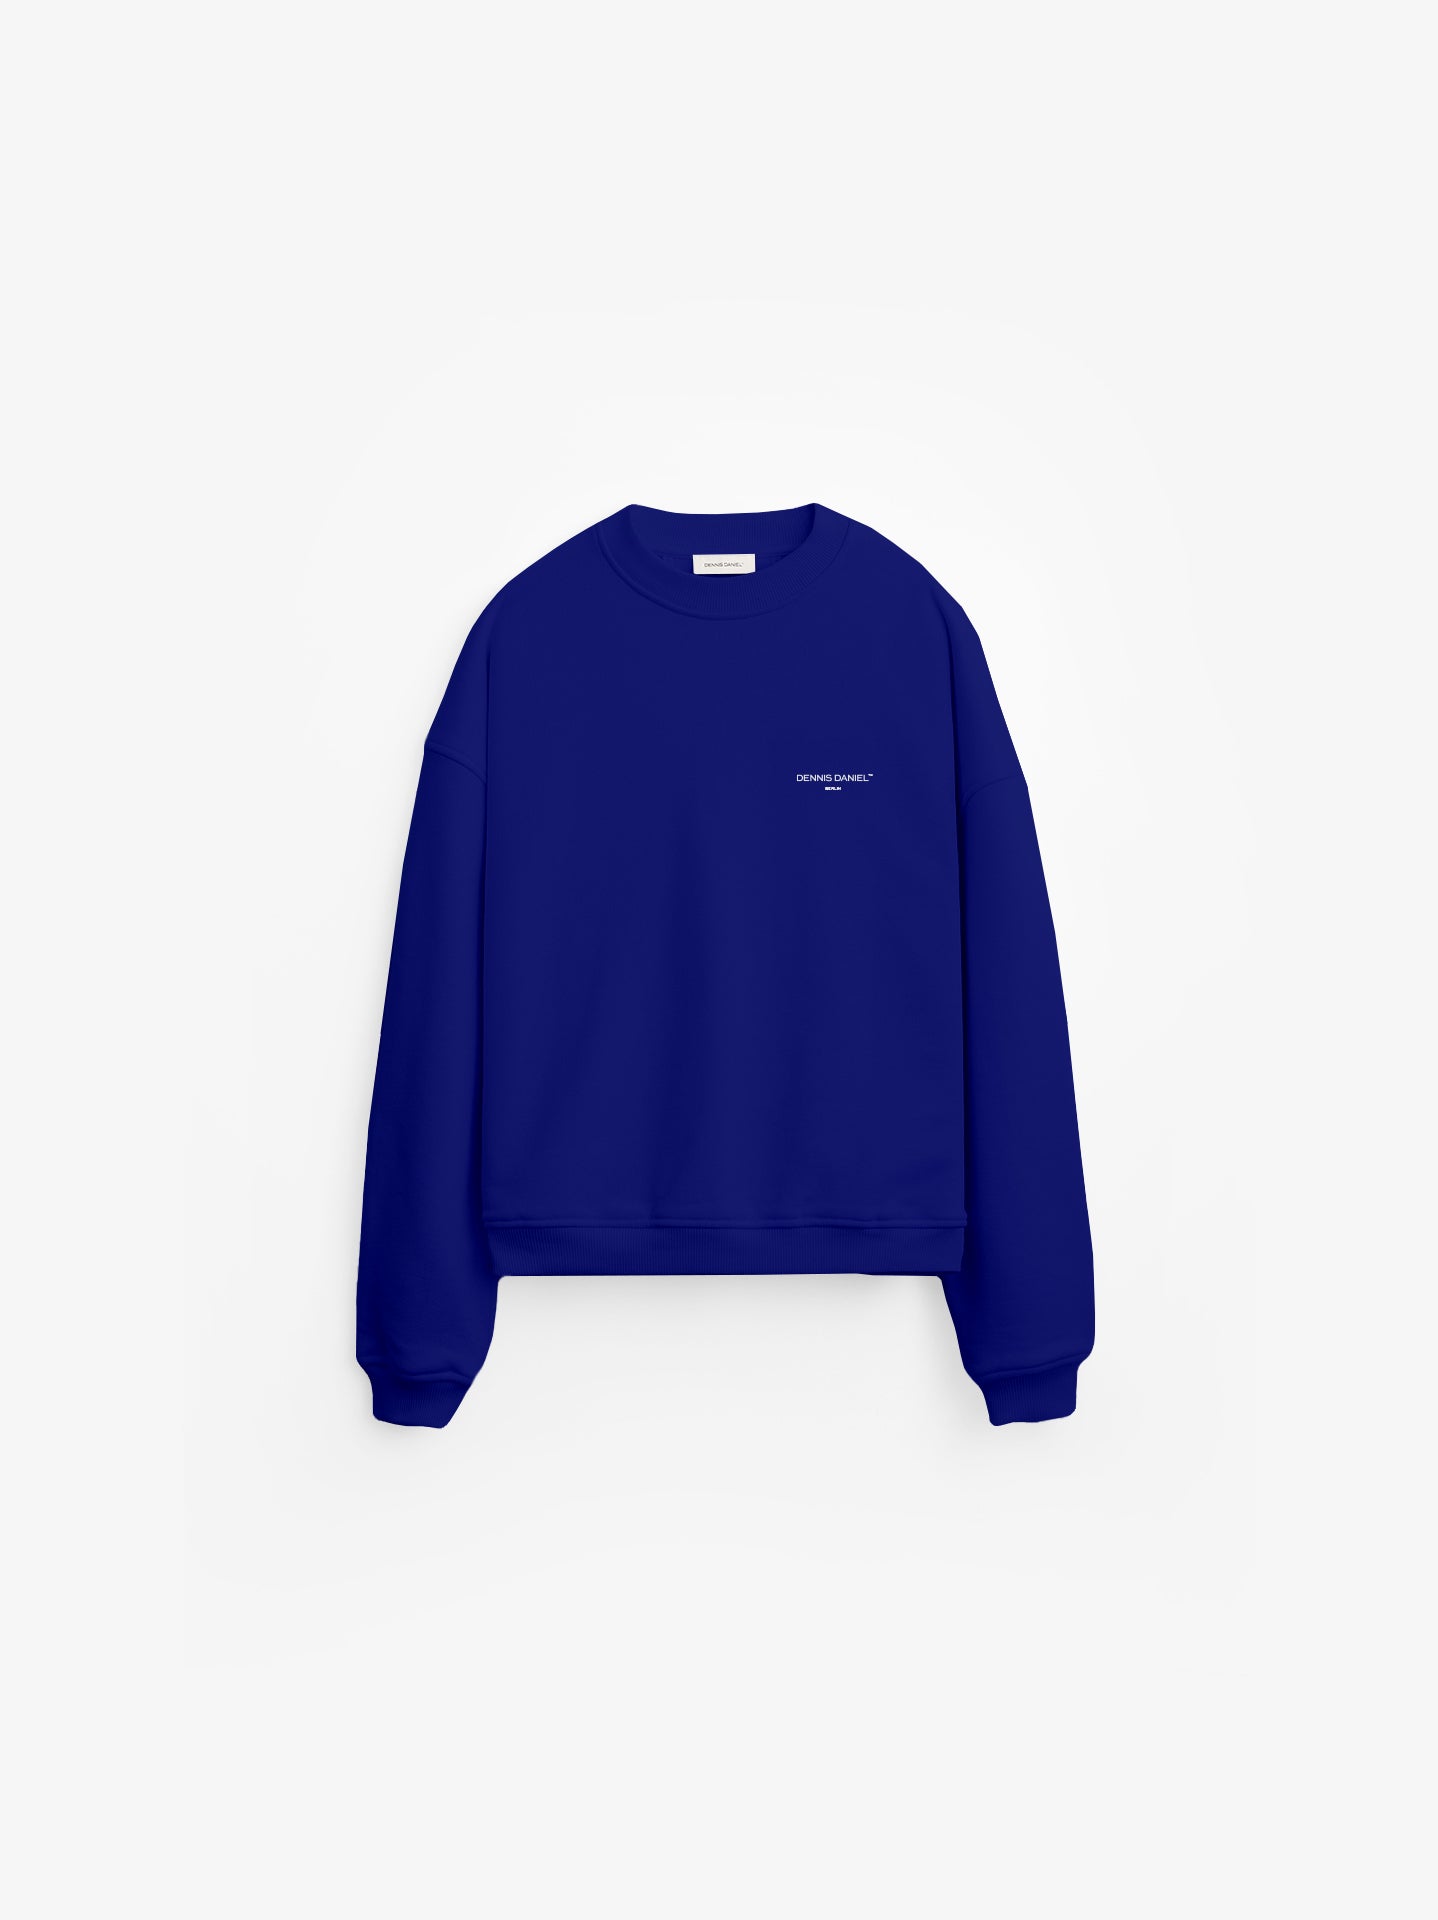 Contemporary Elegance Sweater - Royal Blue